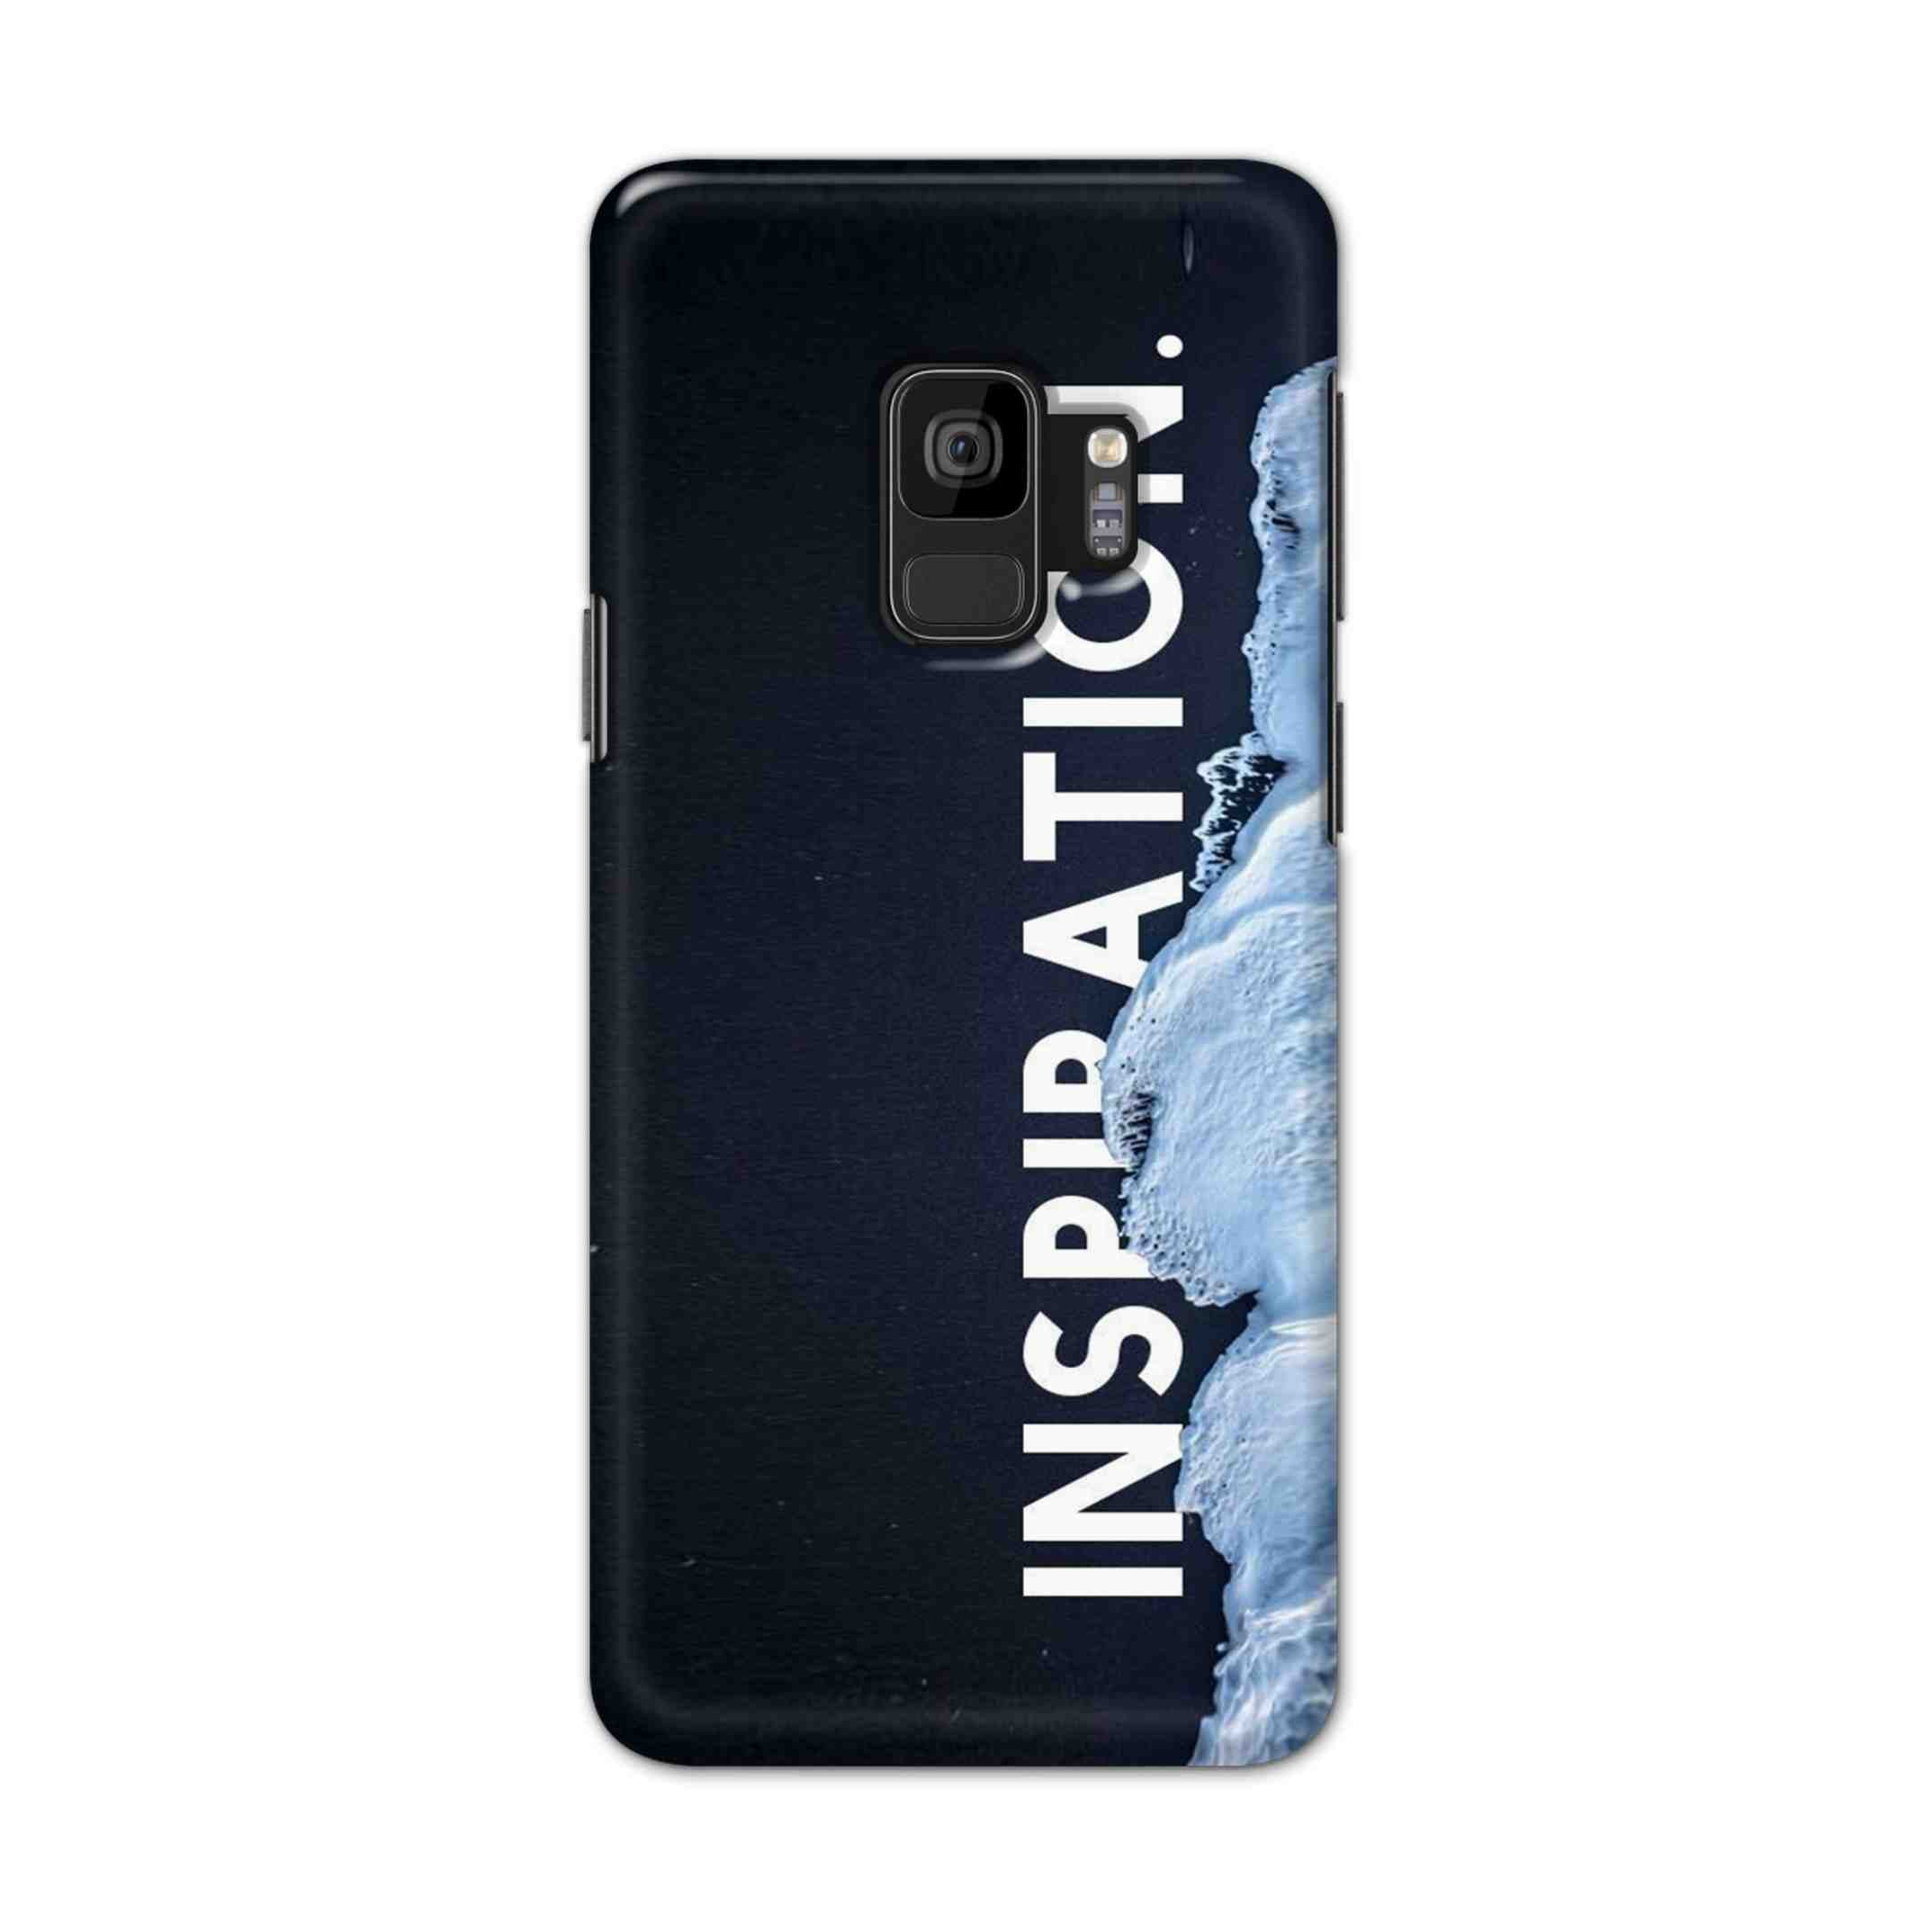 Buy Inspiration Hard Back Mobile Phone Case Cover For Samsung S9 Online